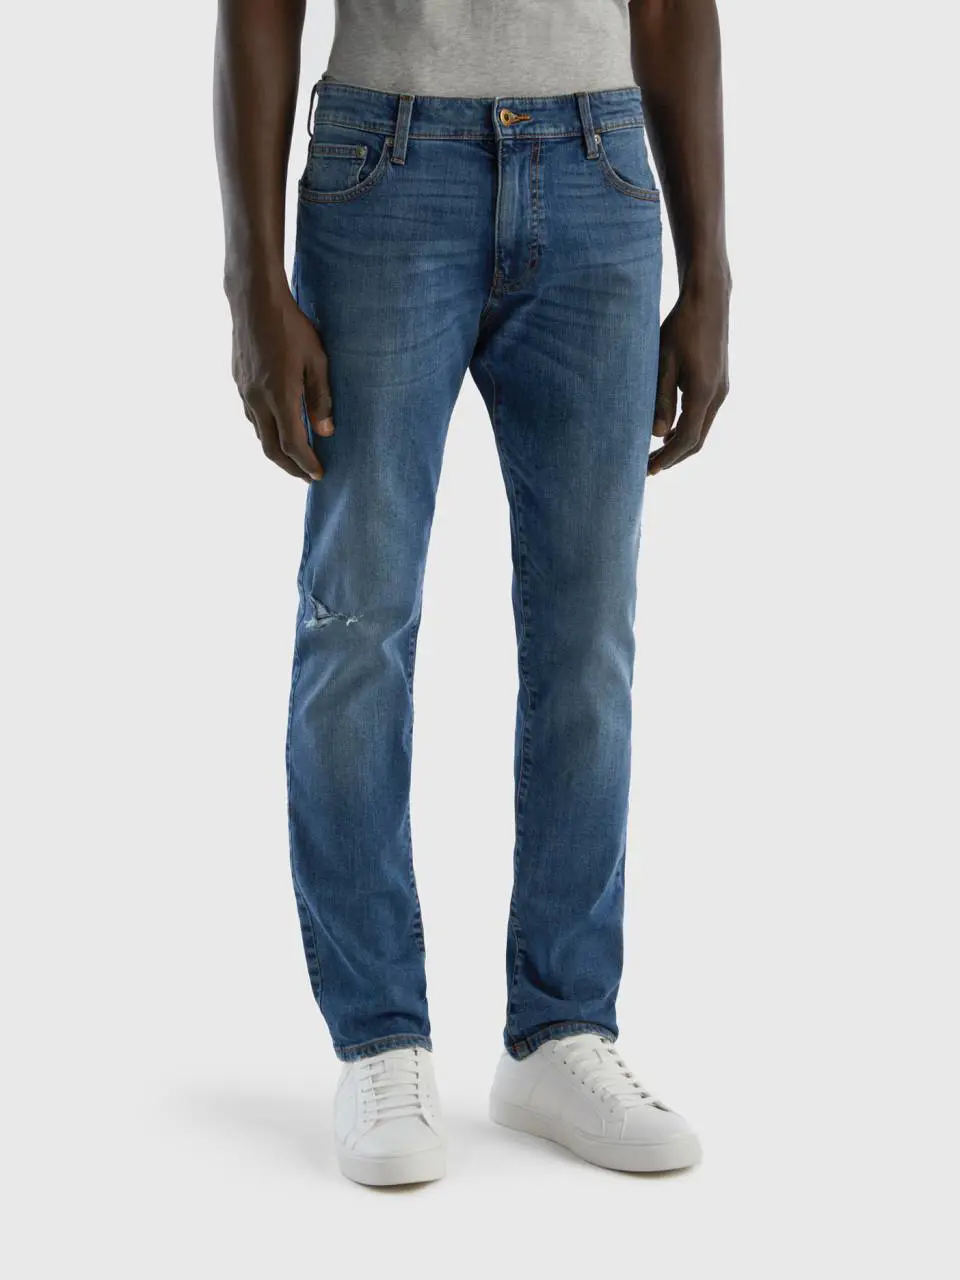 Benetton stretch slim fit jeans. 1